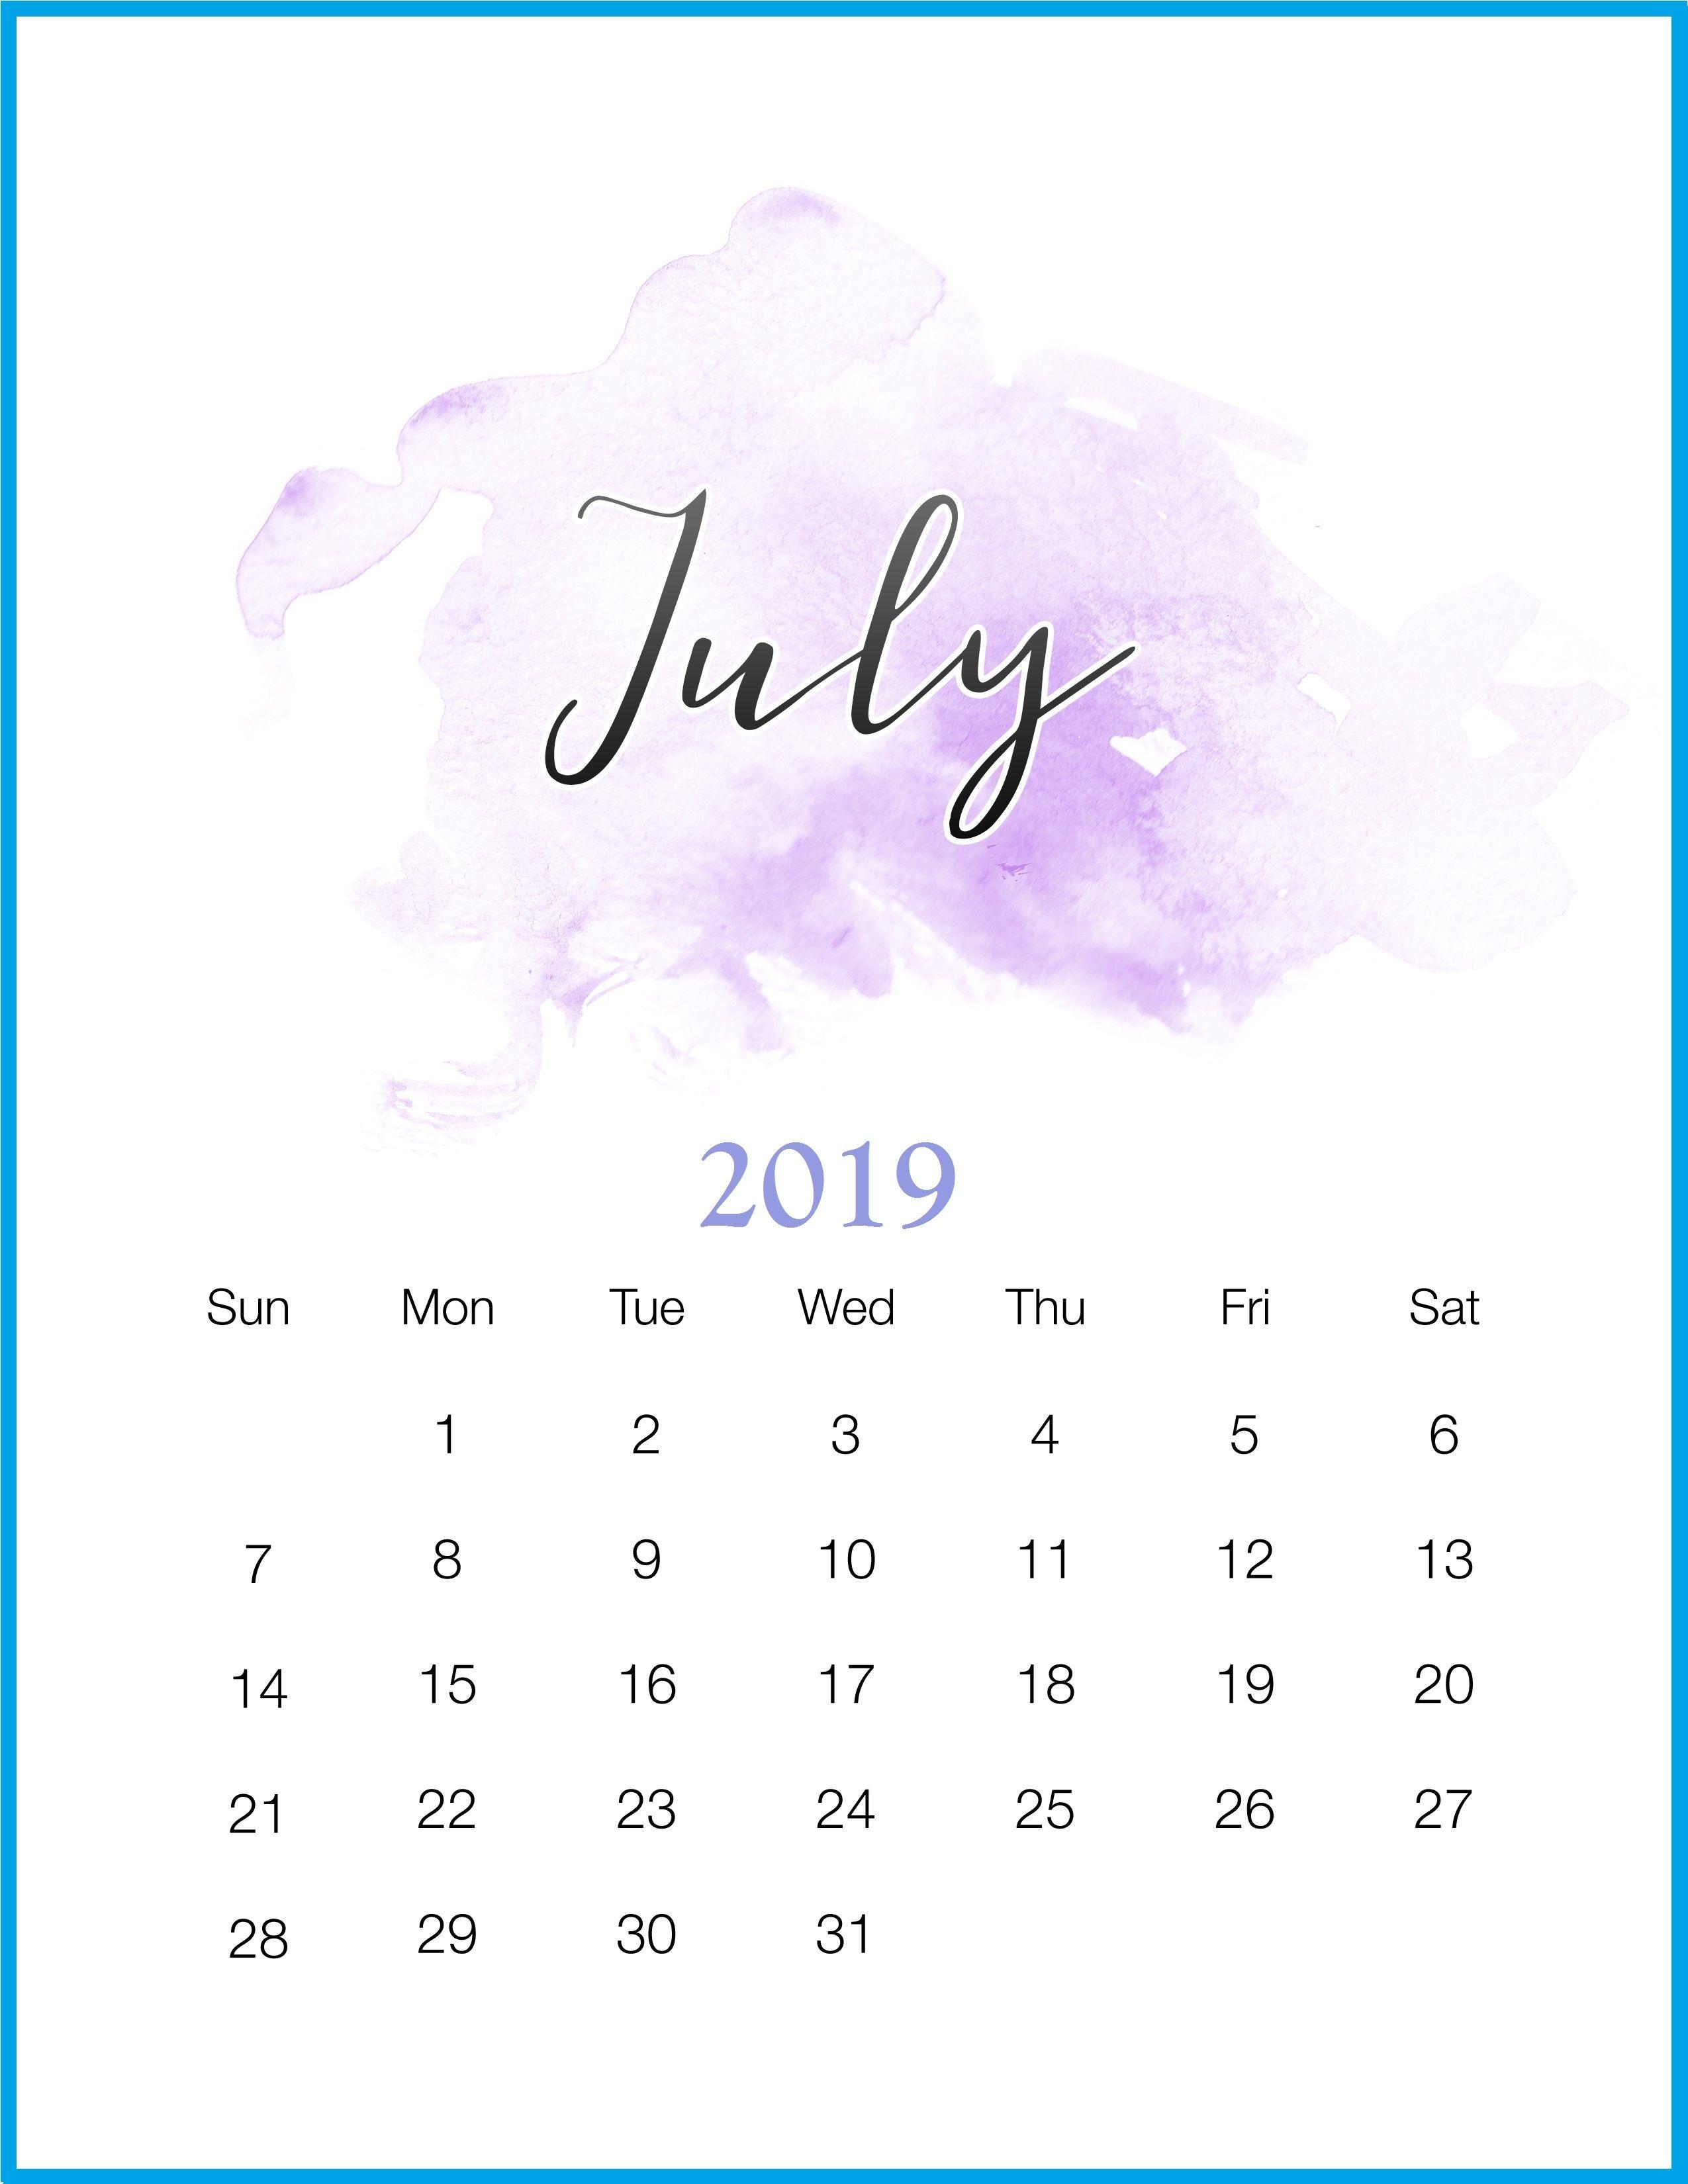 get free july 2019 calendar decemberjuly 2019 calendar